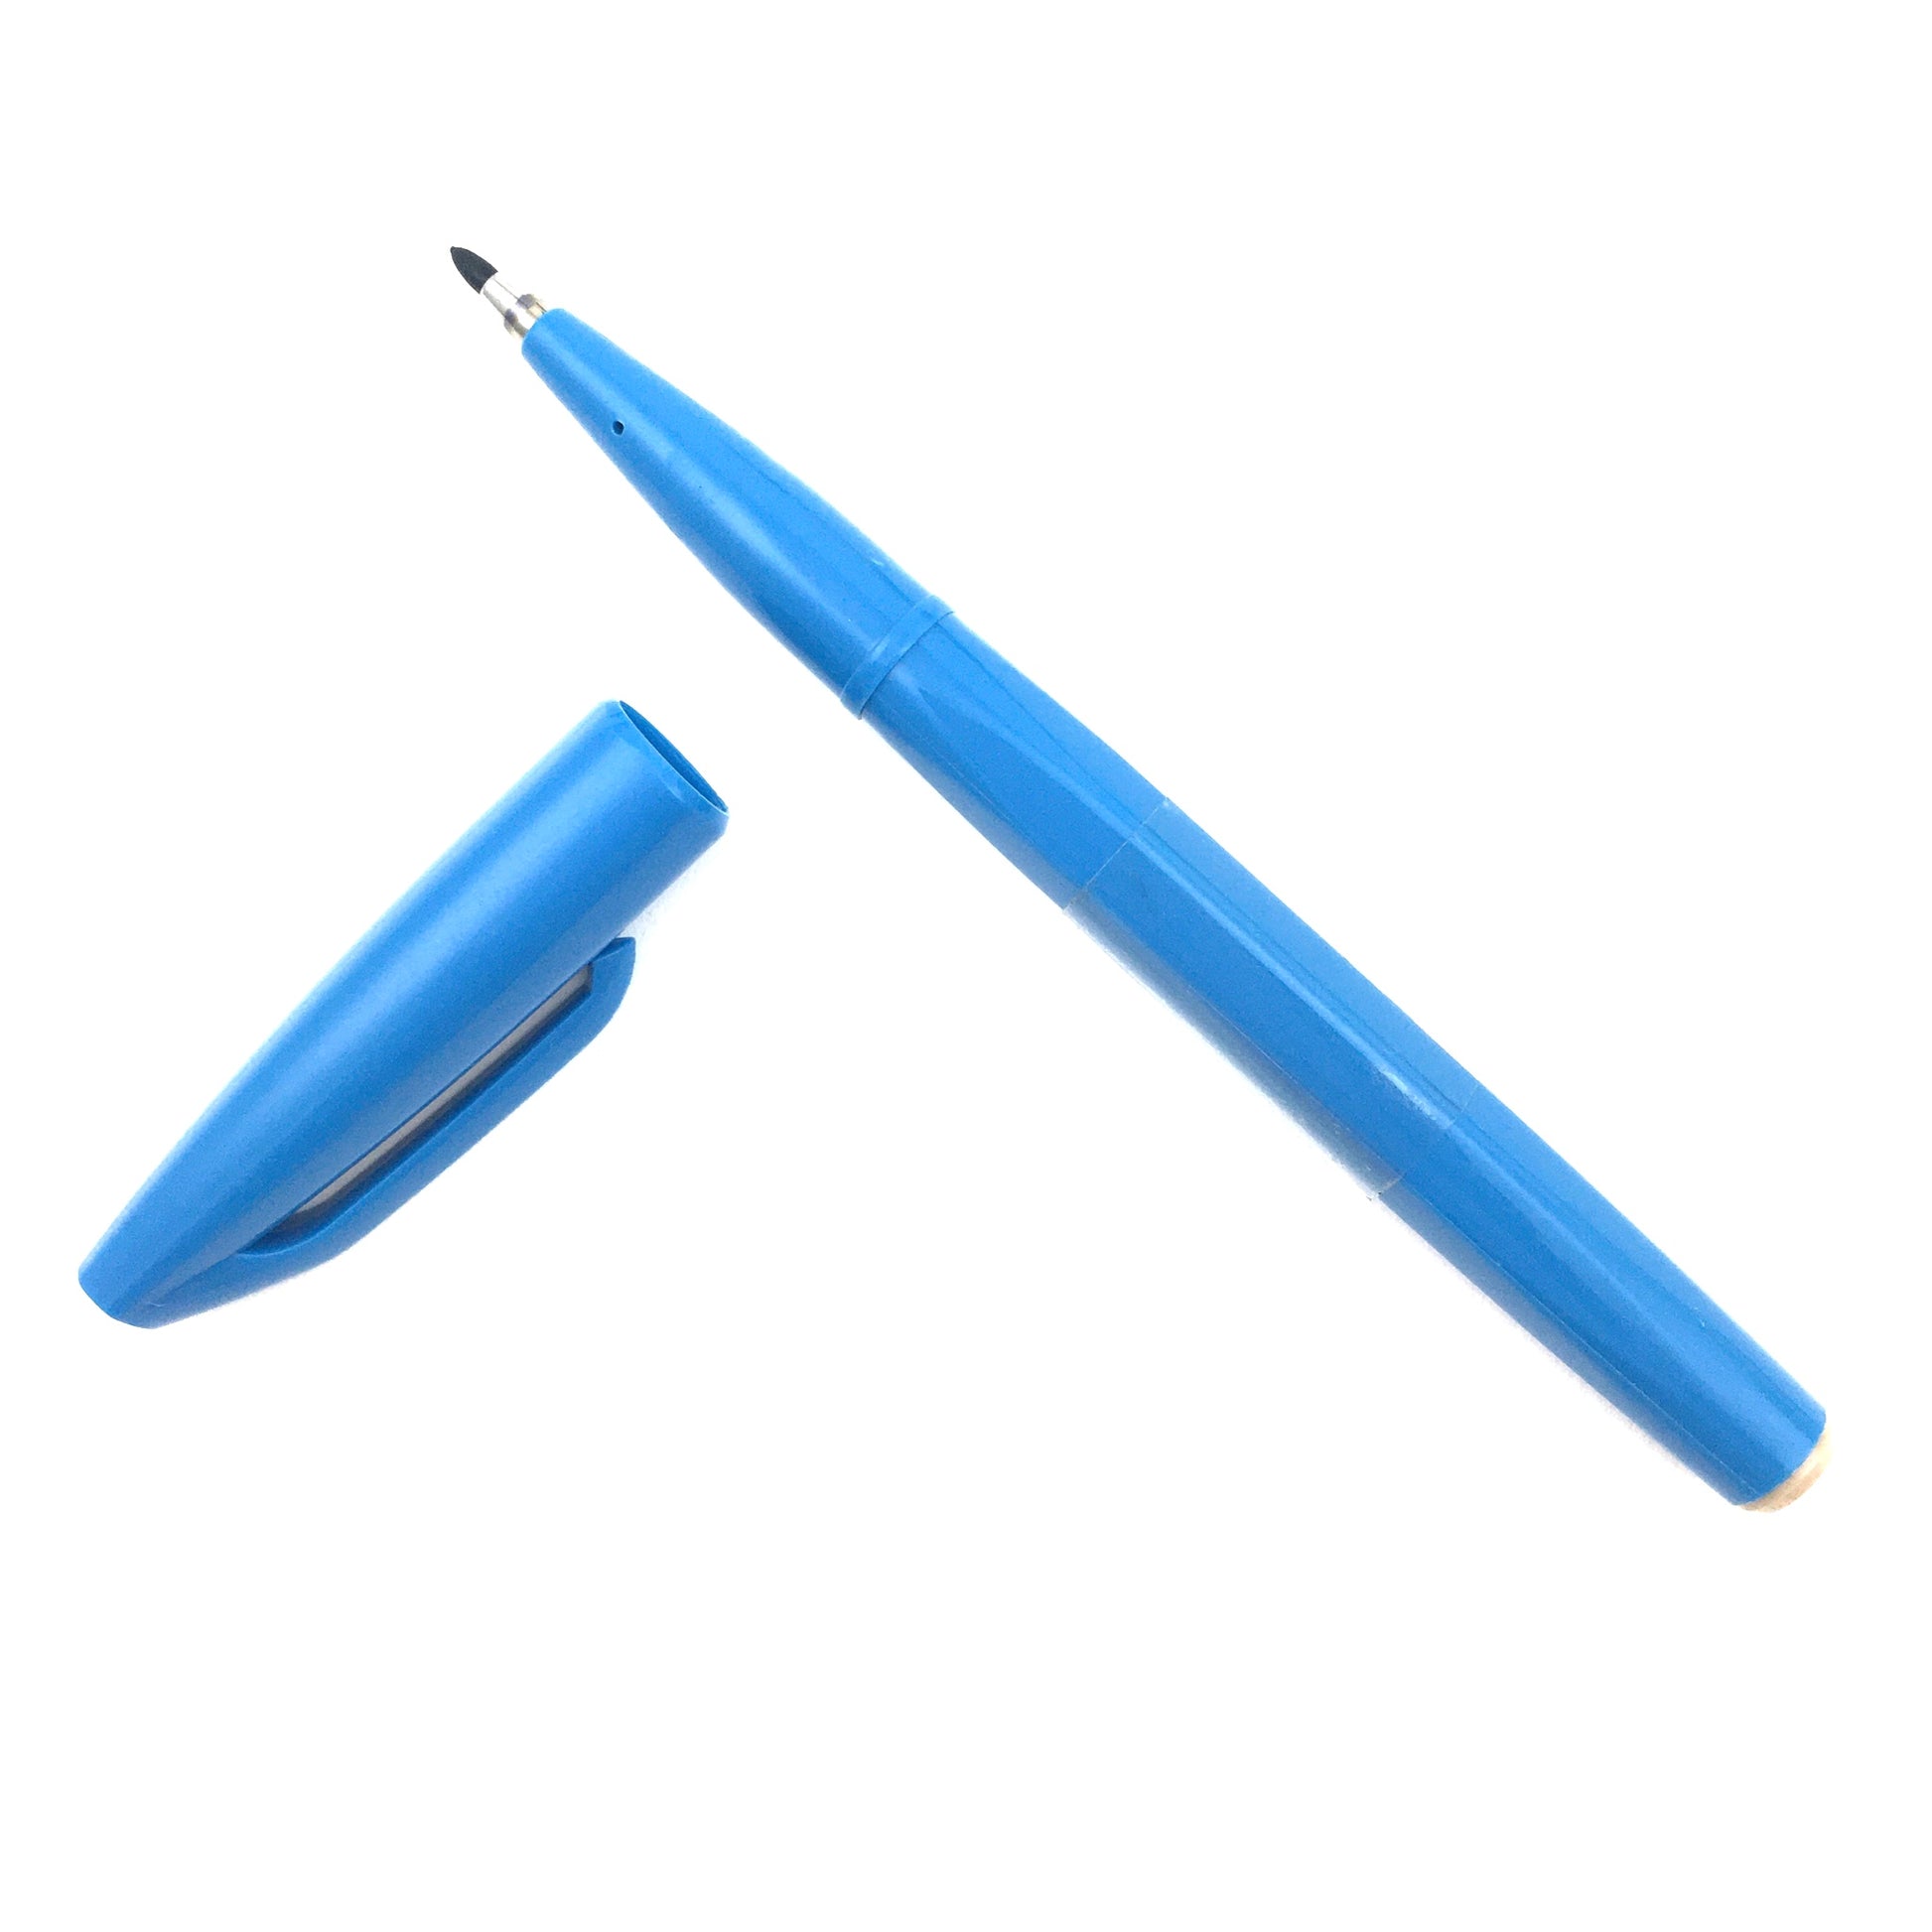 Pentel Sign Pen with Fiber Tip - Sky Blue by Pentel - K. A. Artist Shop